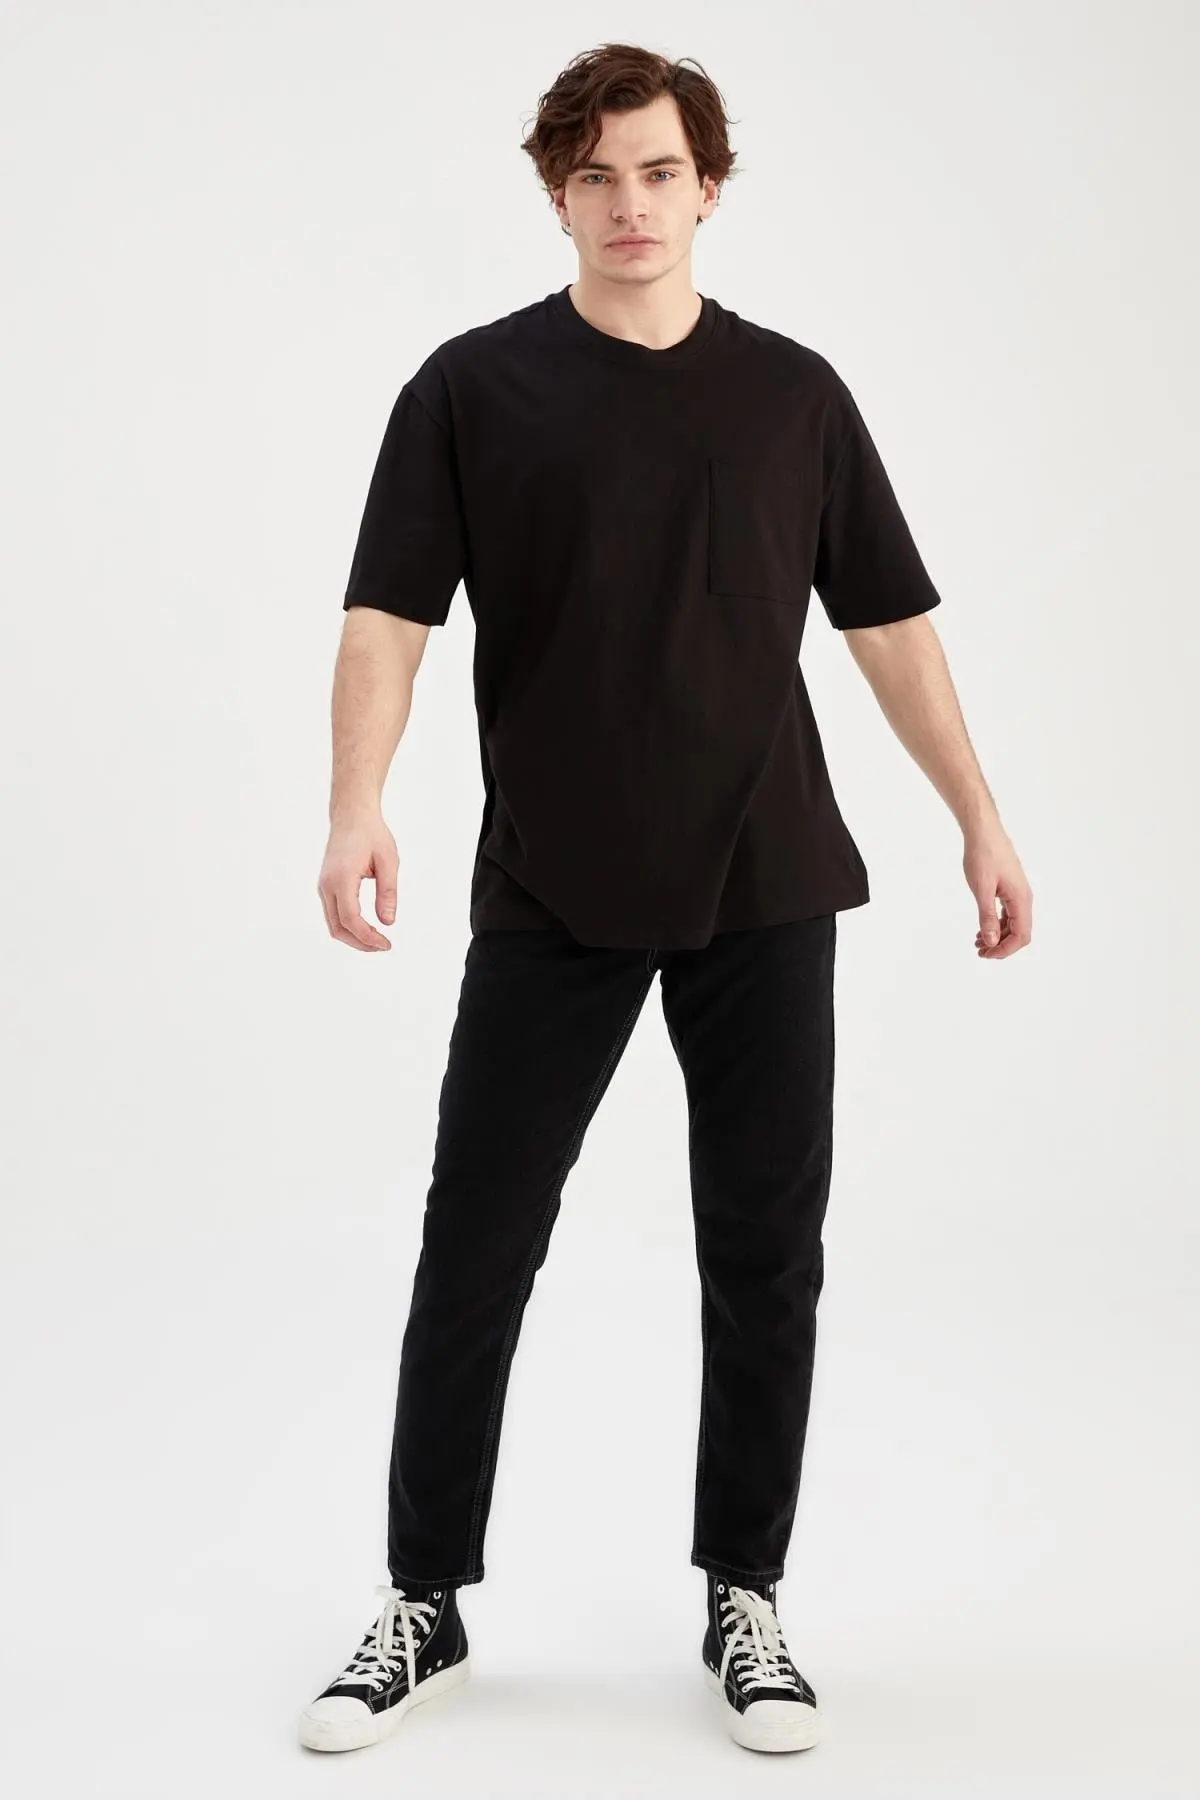 تیشرت اور سایز تک جیب مردانه مشکی برند Defacto 